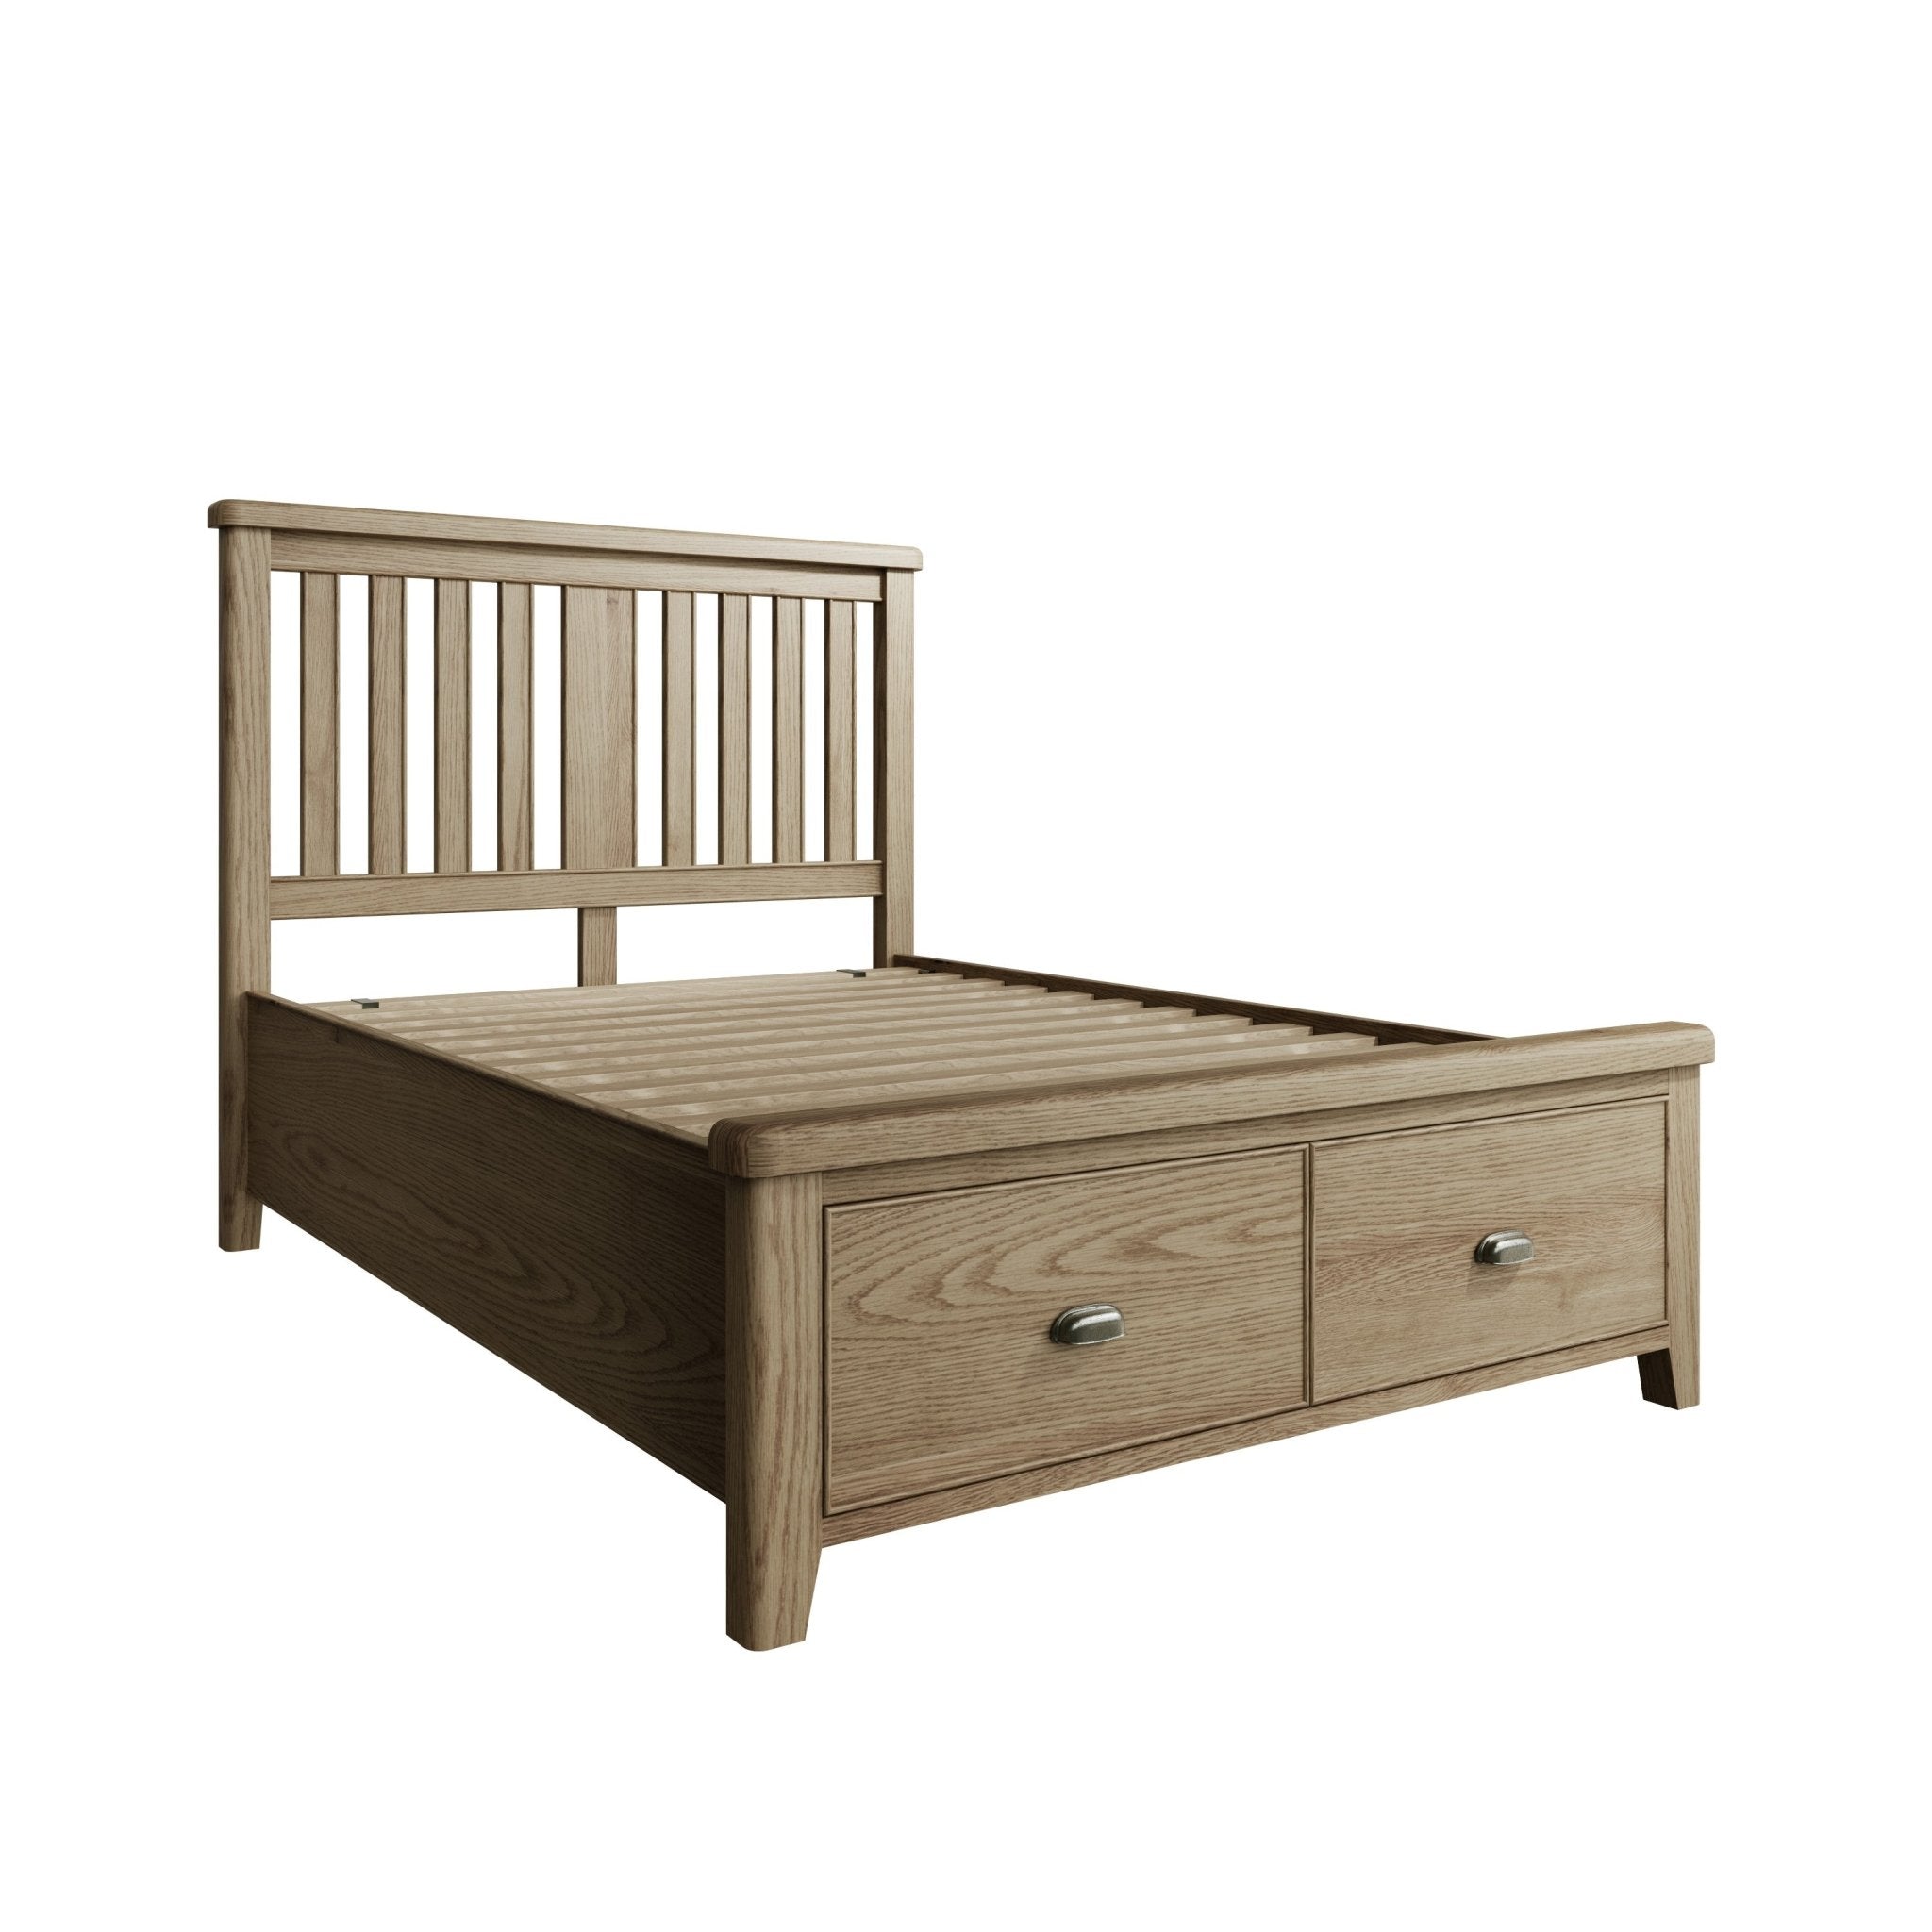 Rusper Oak 4'6 Double Bed Frame - Wooden Headboard & Drawers - Duck Barn Interiors